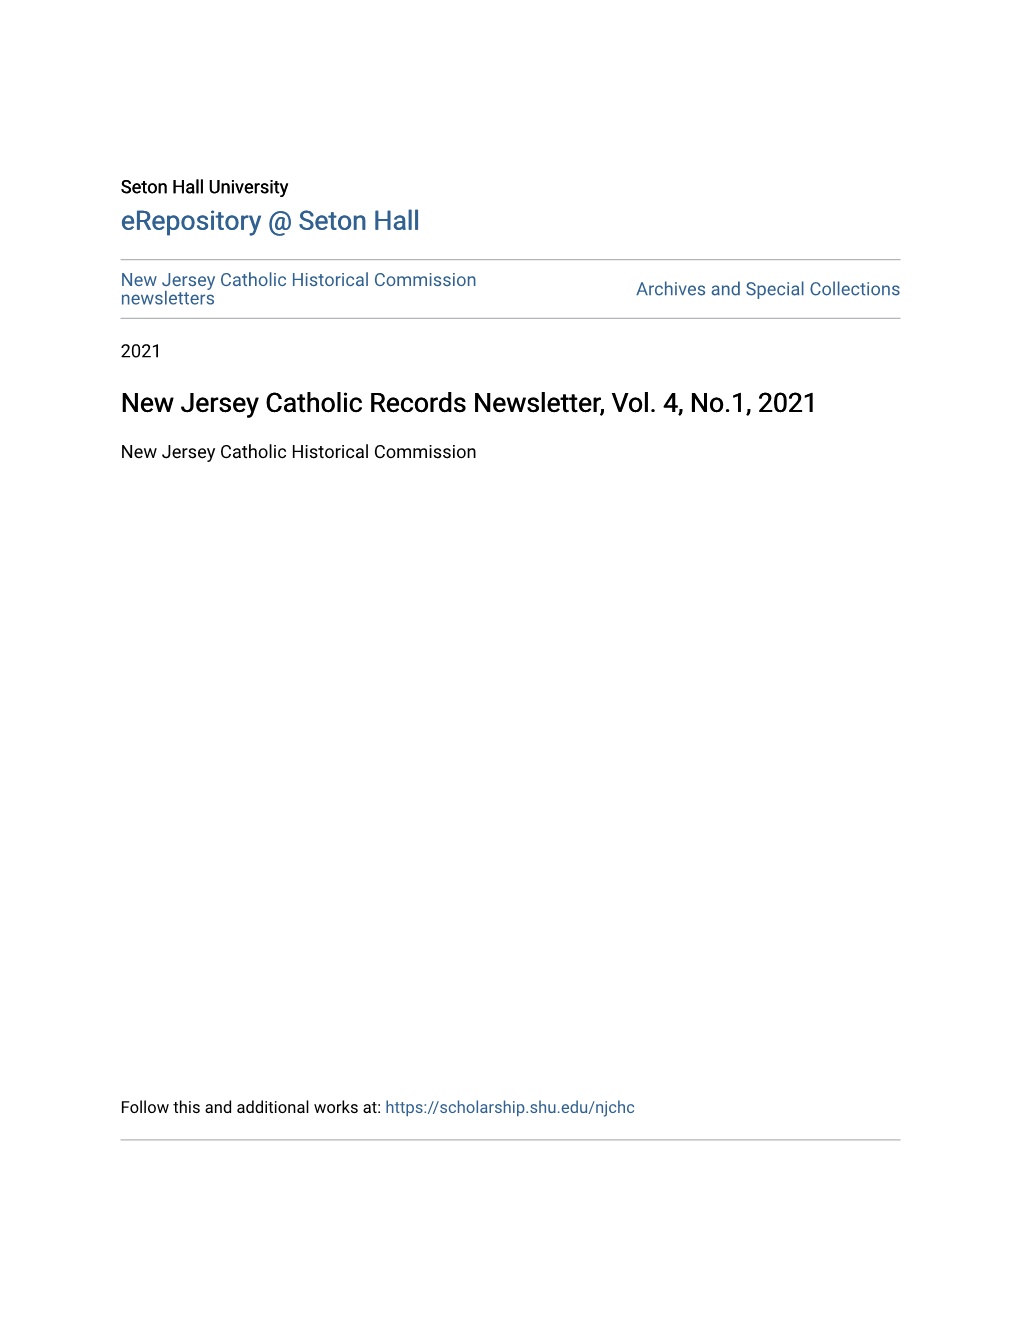 New Jersey Catholic Records Newsletter, Vol. 4, No.1, 2021